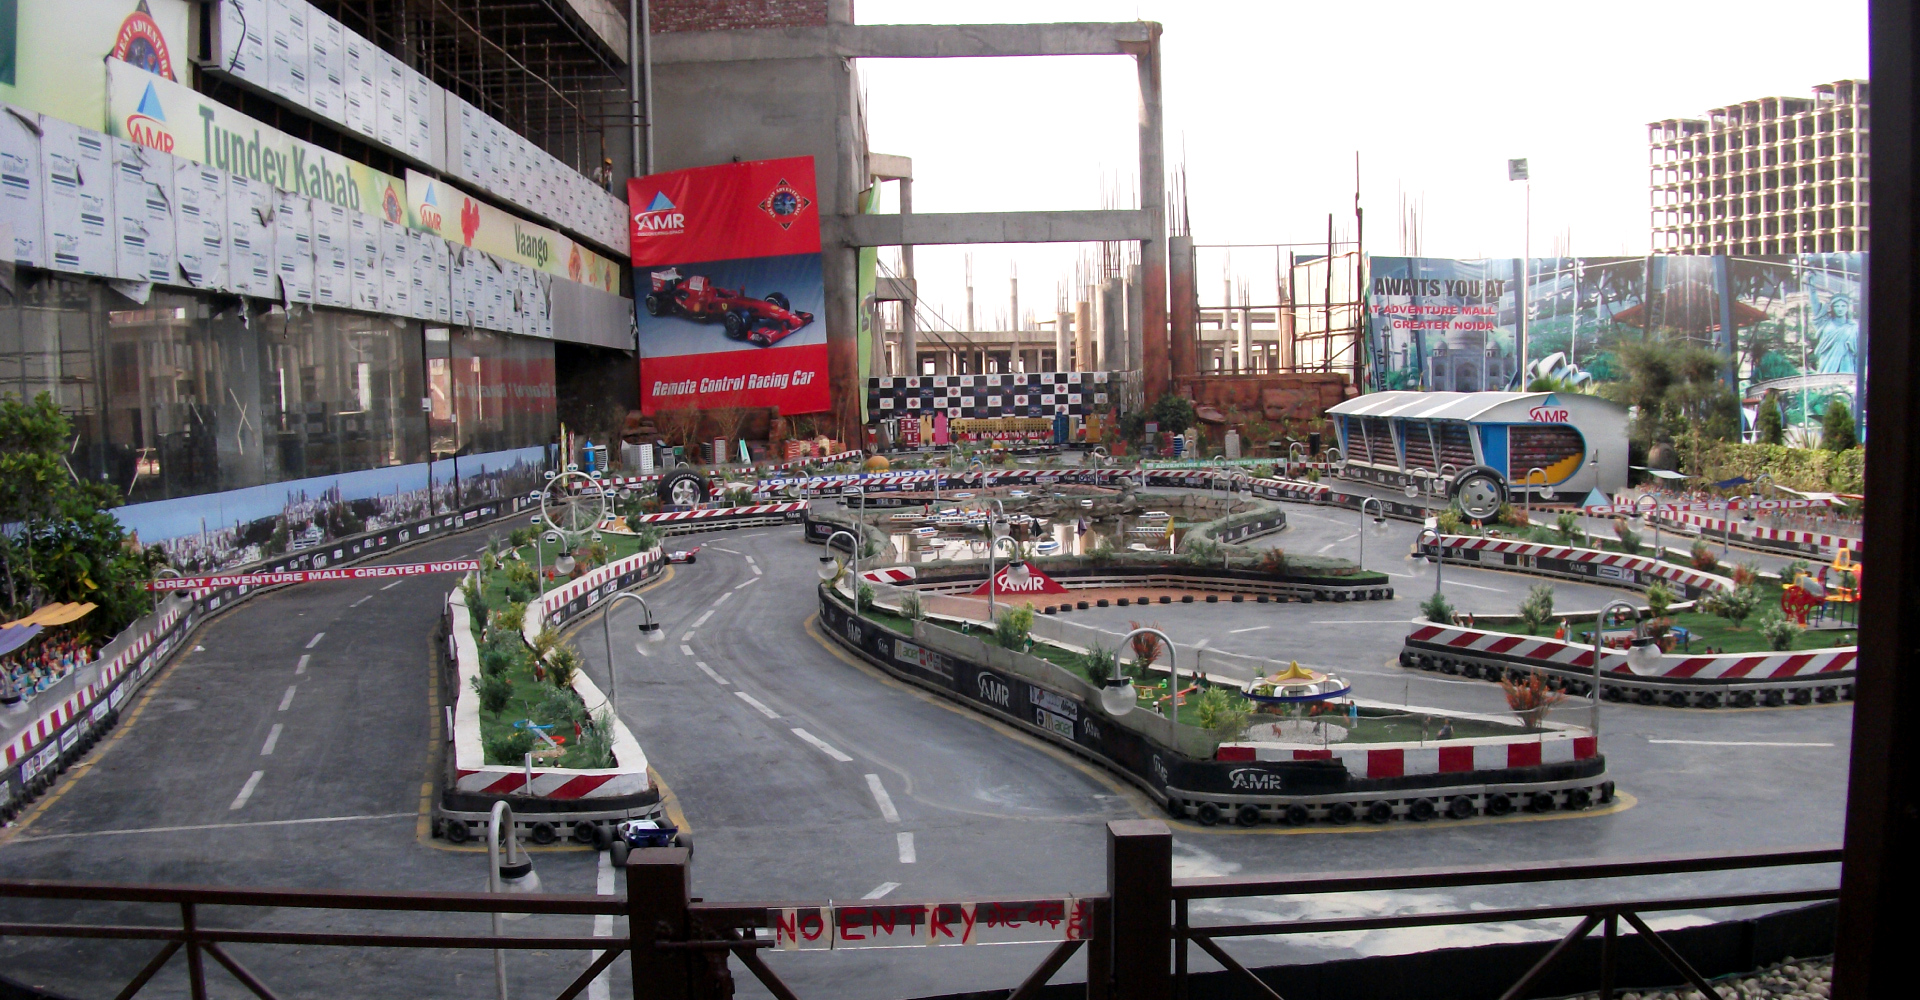 remote control race car track